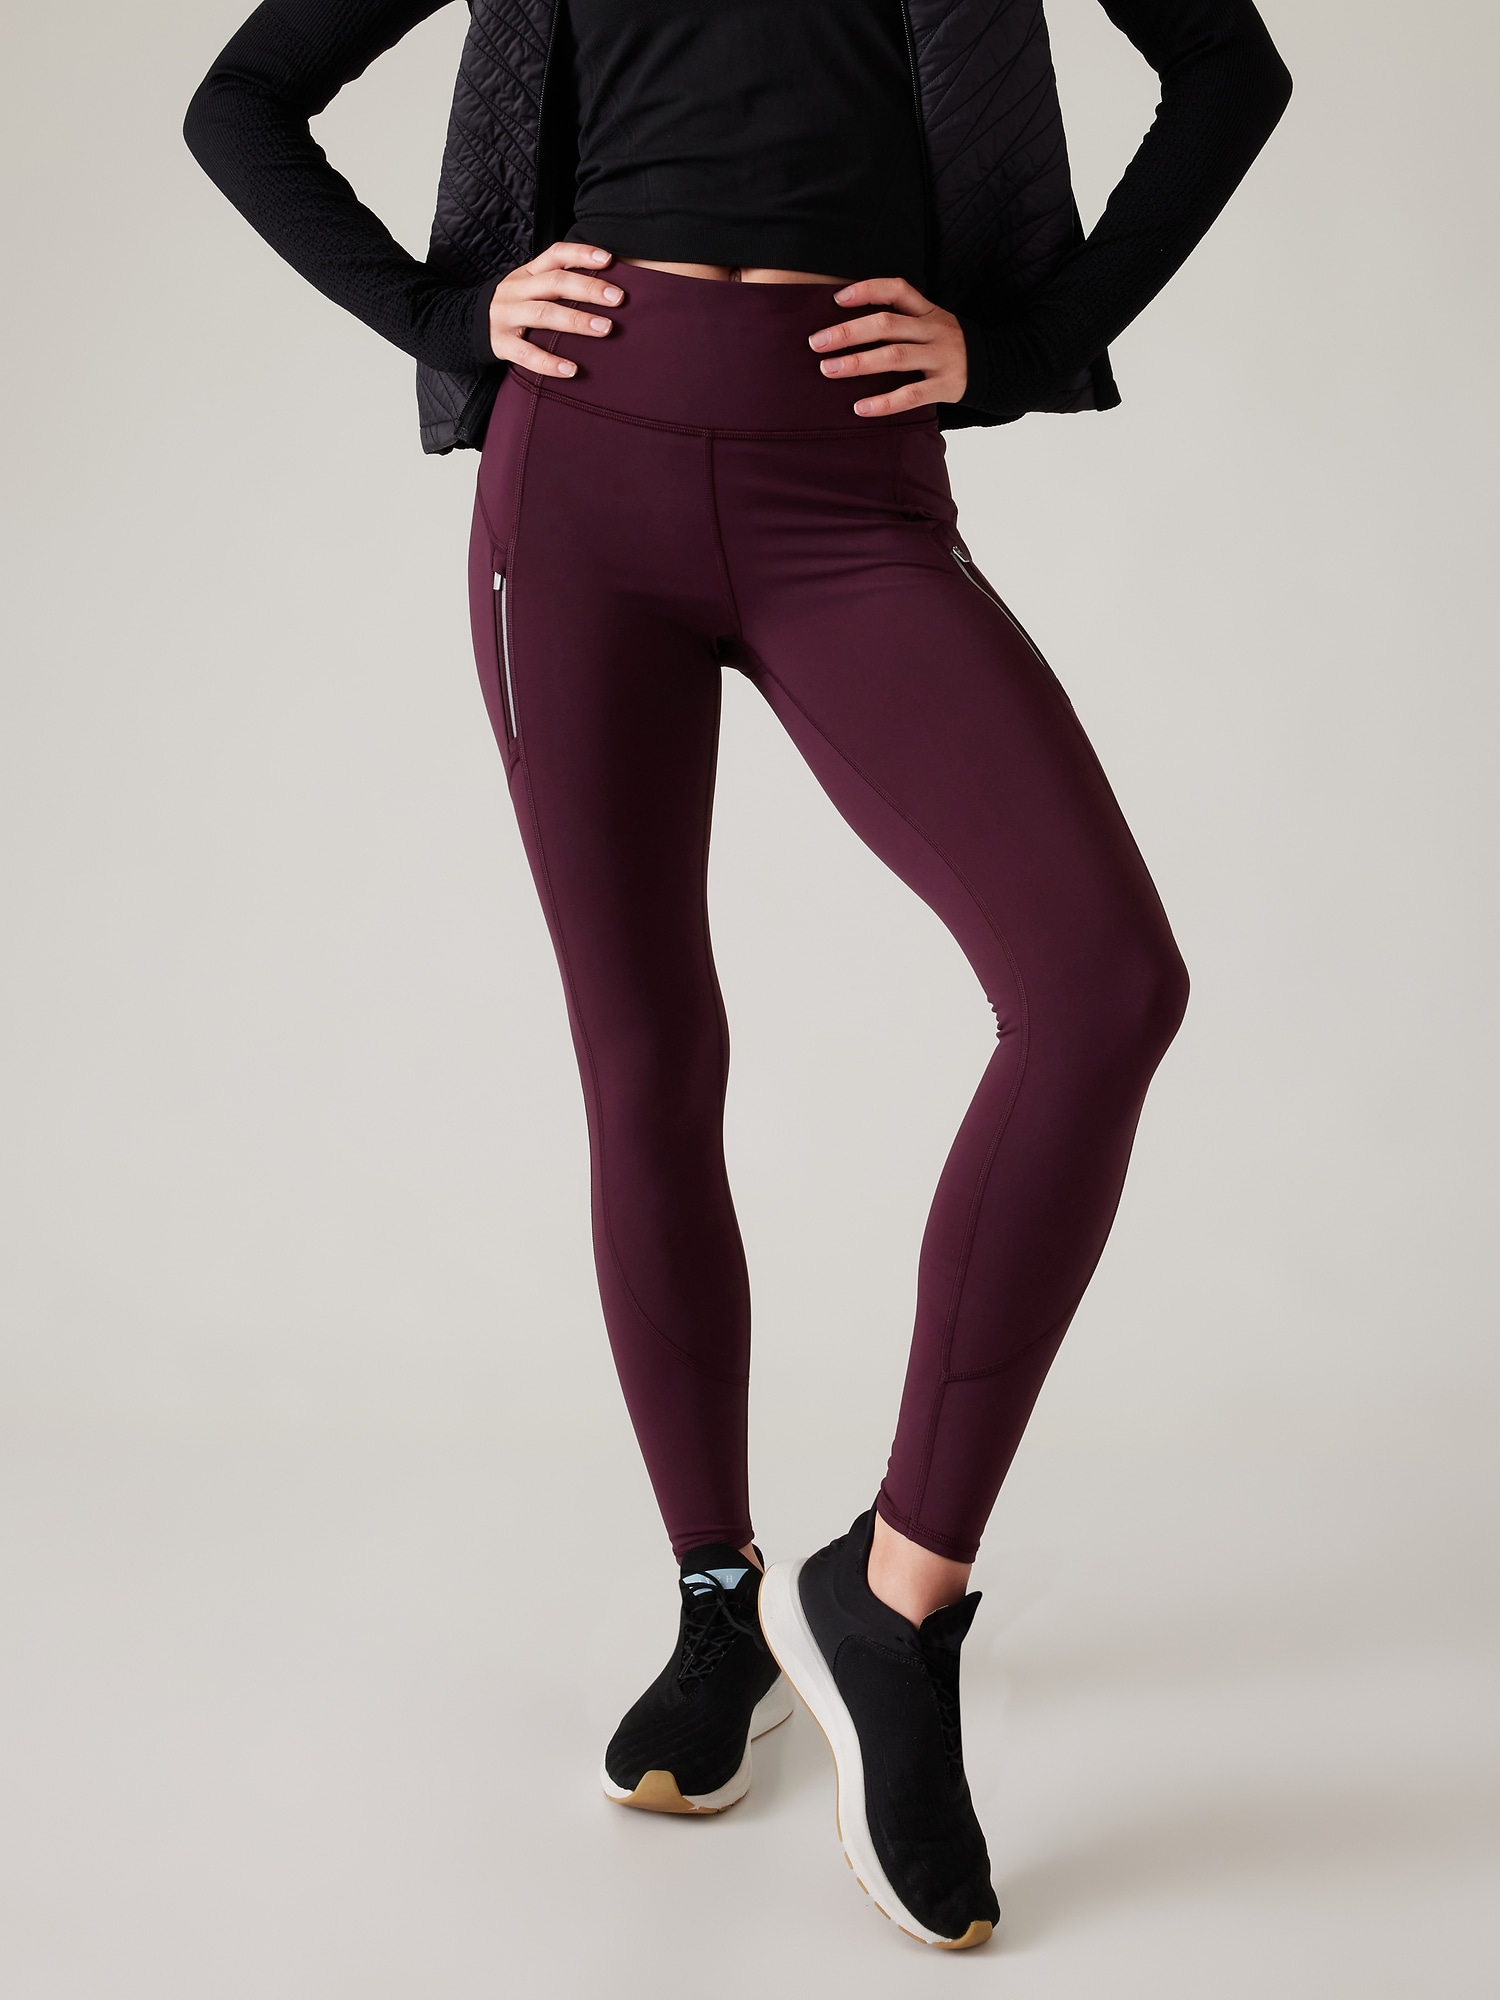 Athleta Woman's Sz XXS Gray & Black Fleece-Lined Leggings Zip